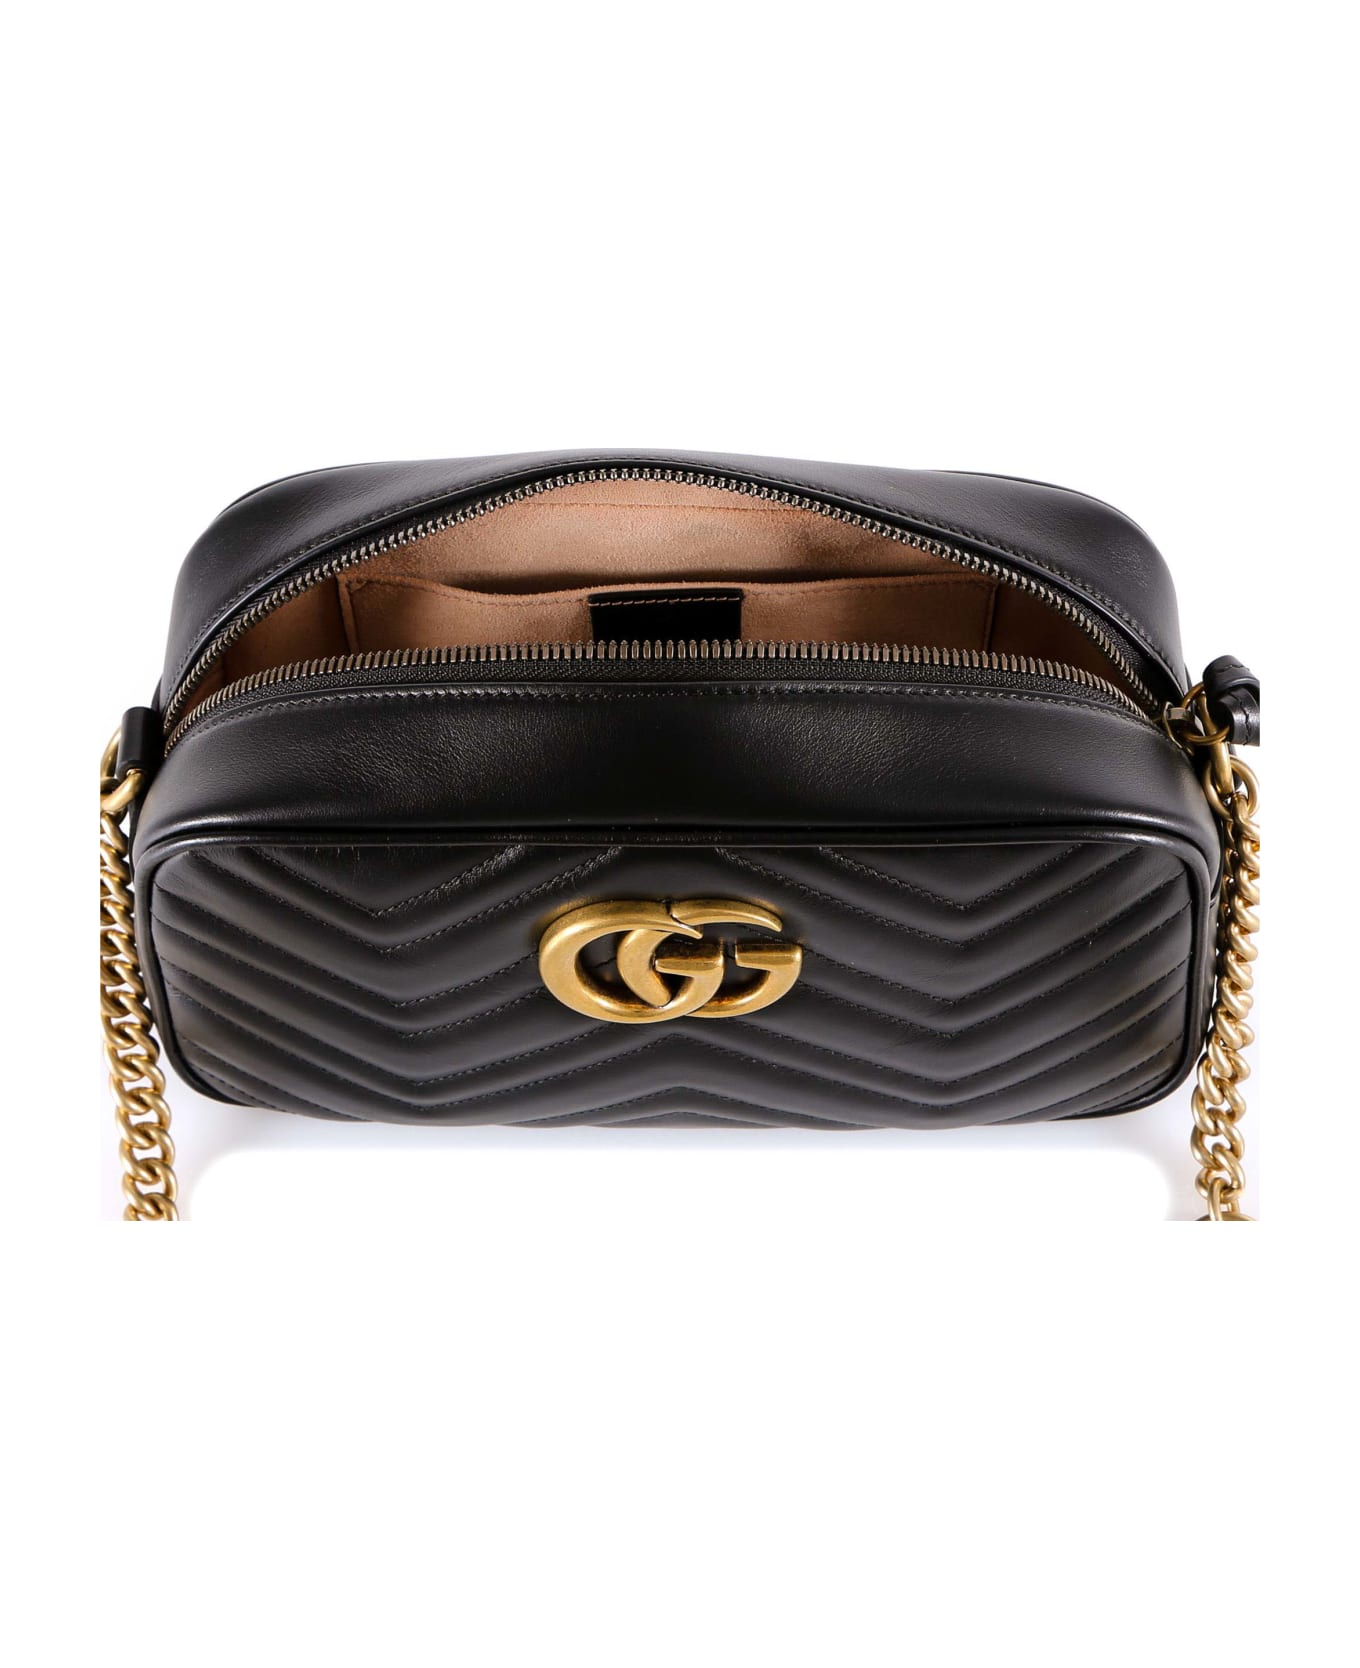 Gucci Gg Marmont Shoulder Bag - Nero